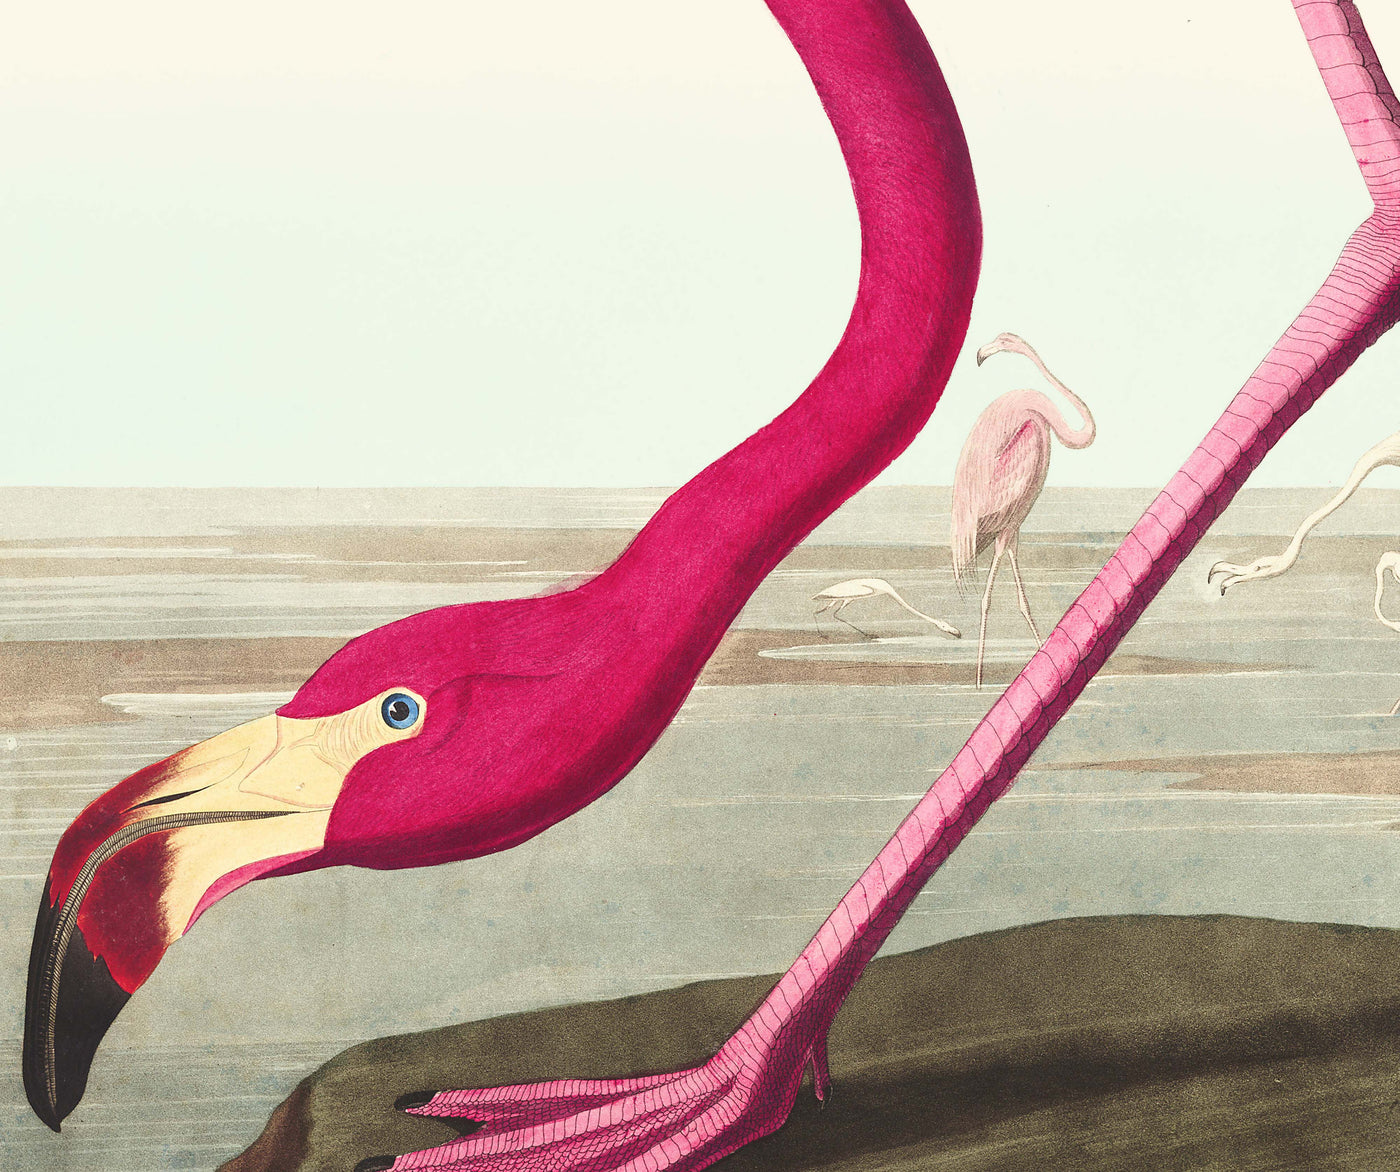 American Flamingo por John James Audobon, 1827 - Arte personalizado